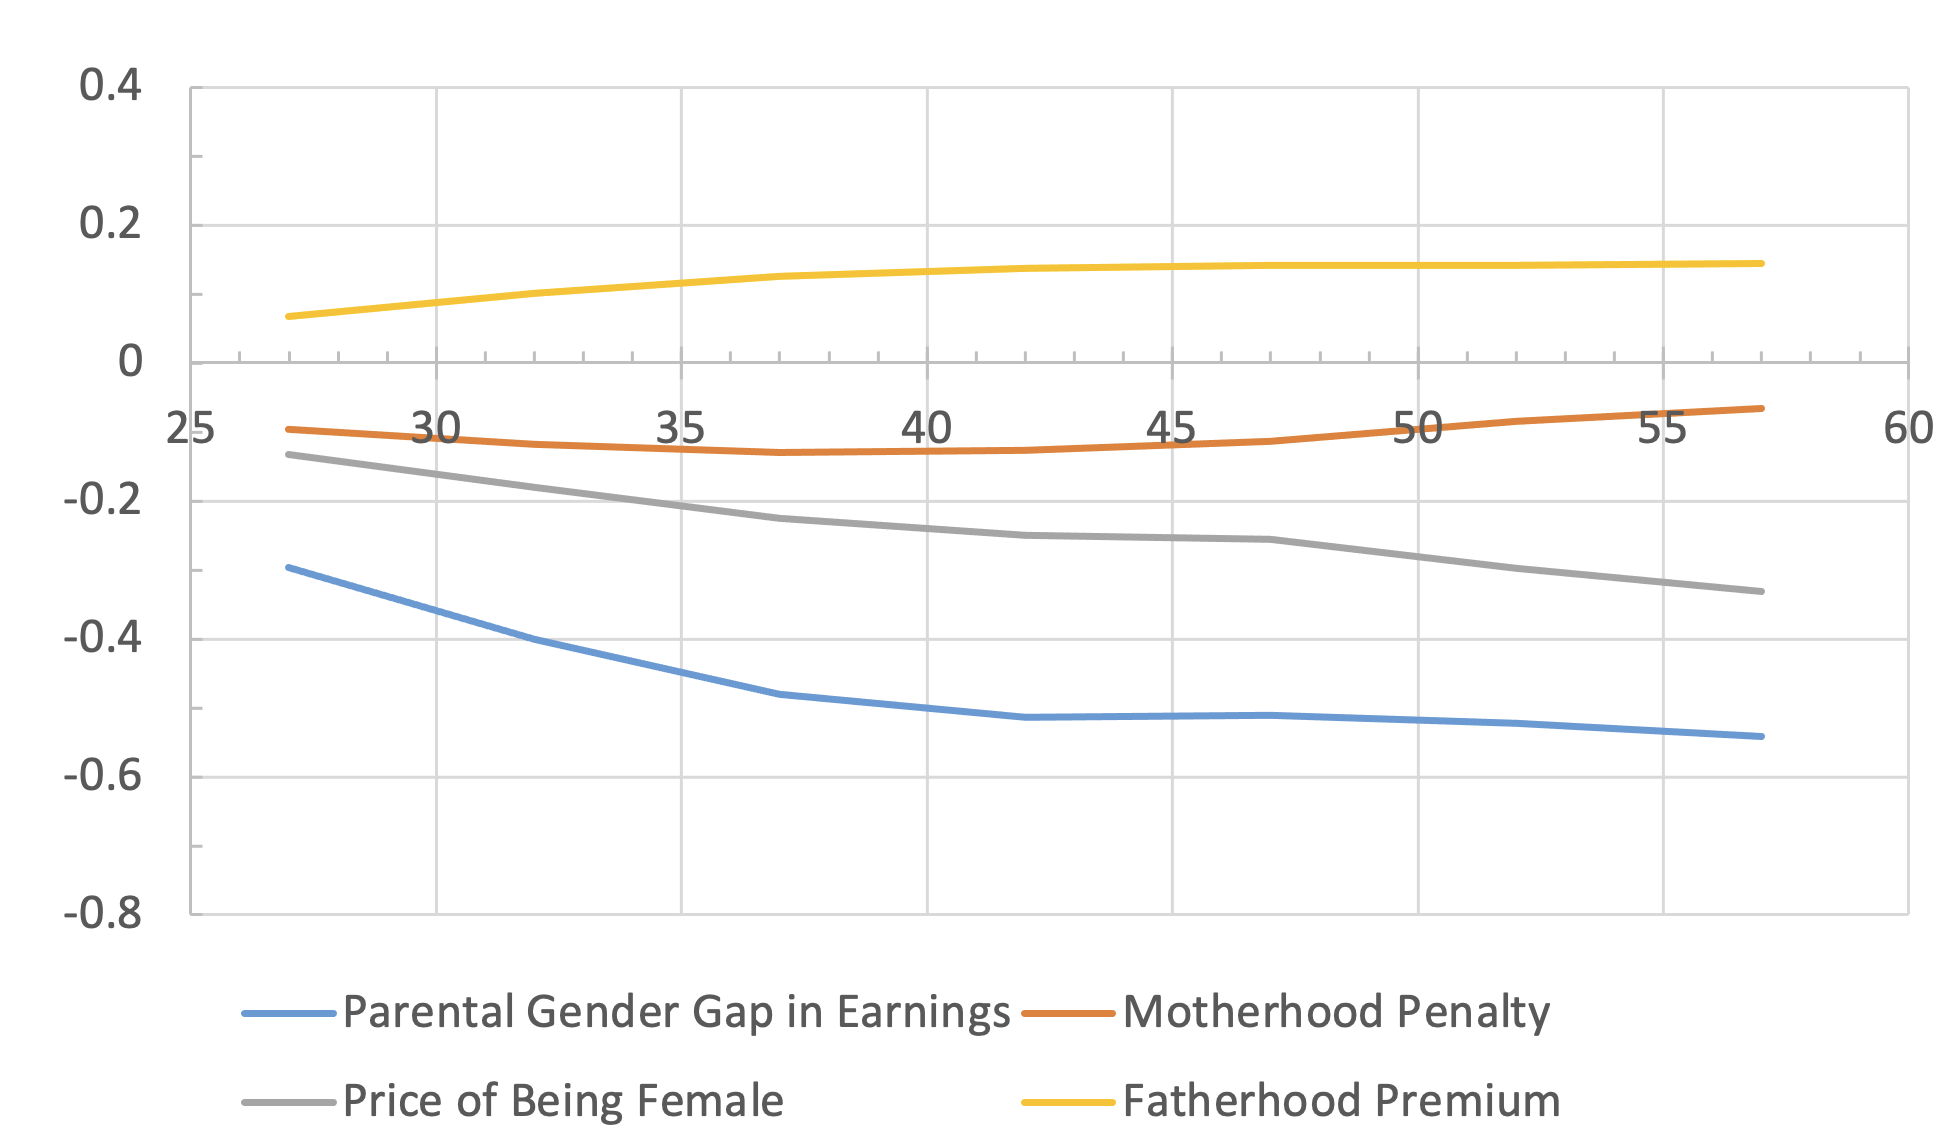 Figure 3b Parental gender gap in earnings: Non-time-sensitive occupations